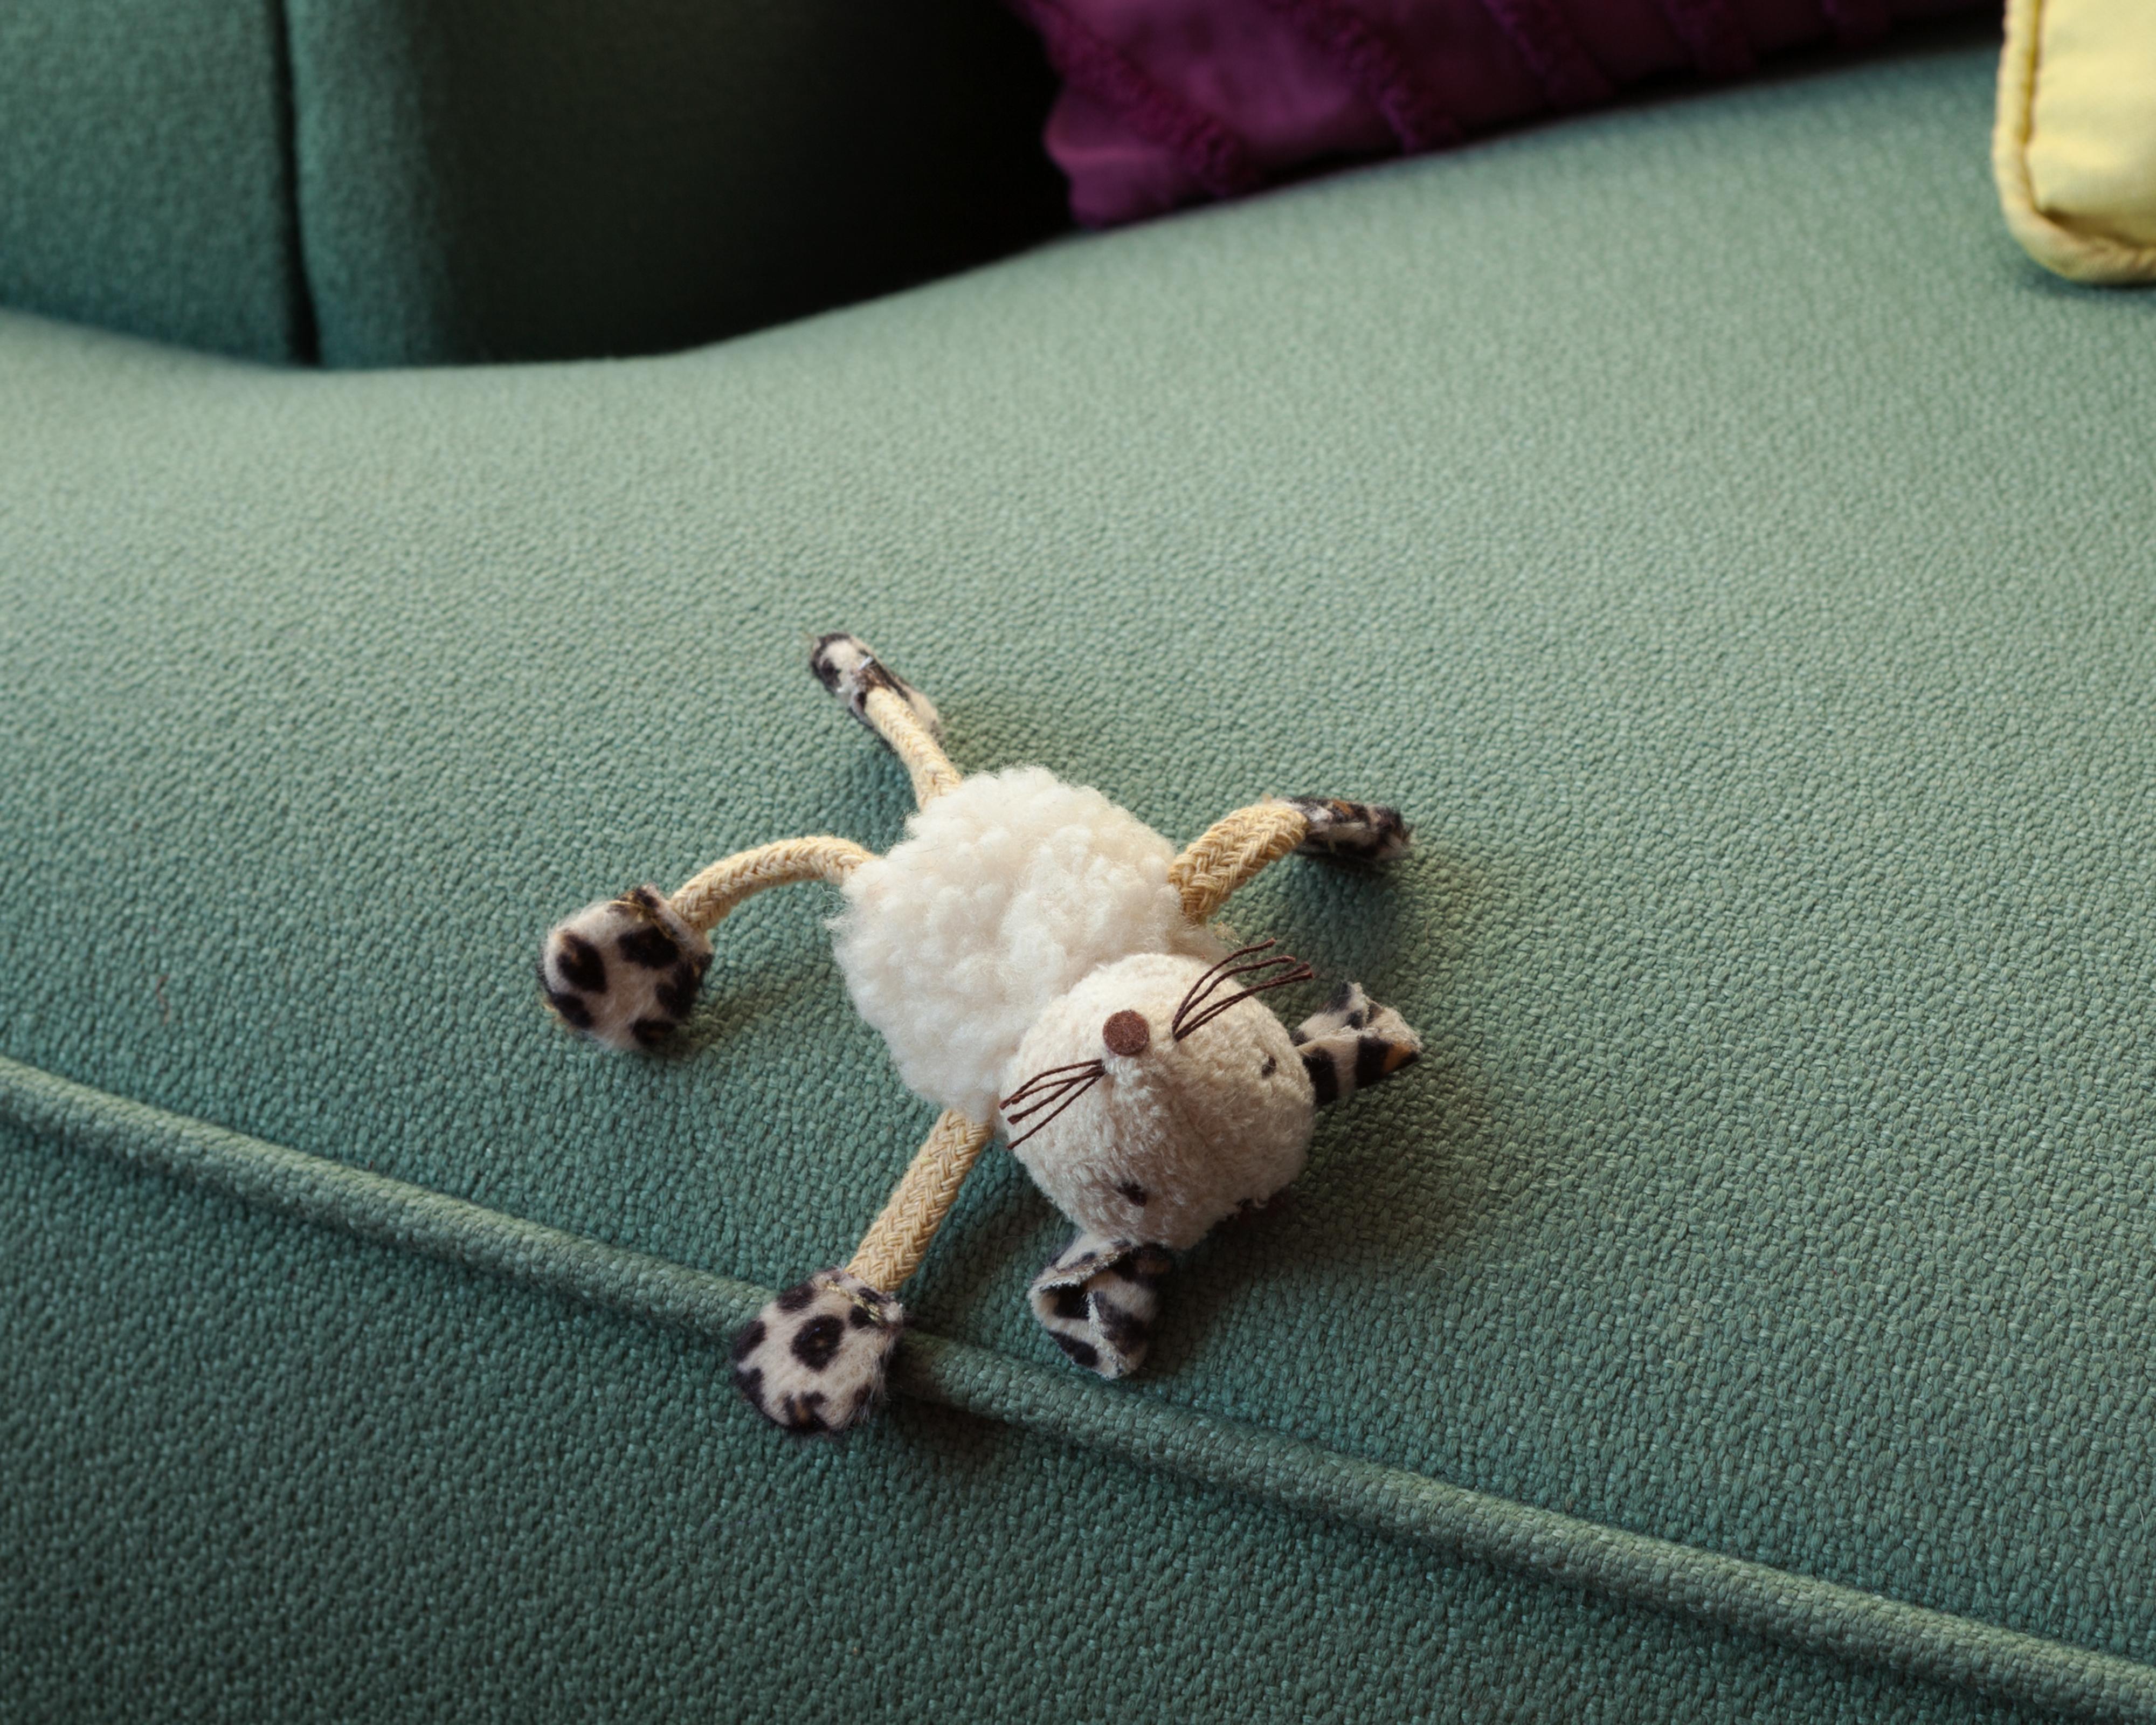 Morbidity & Mortality: Maus Humorvolle Fotografie eines Katzenspielzeugs in Krimsszene – Photograph von Jeanette May